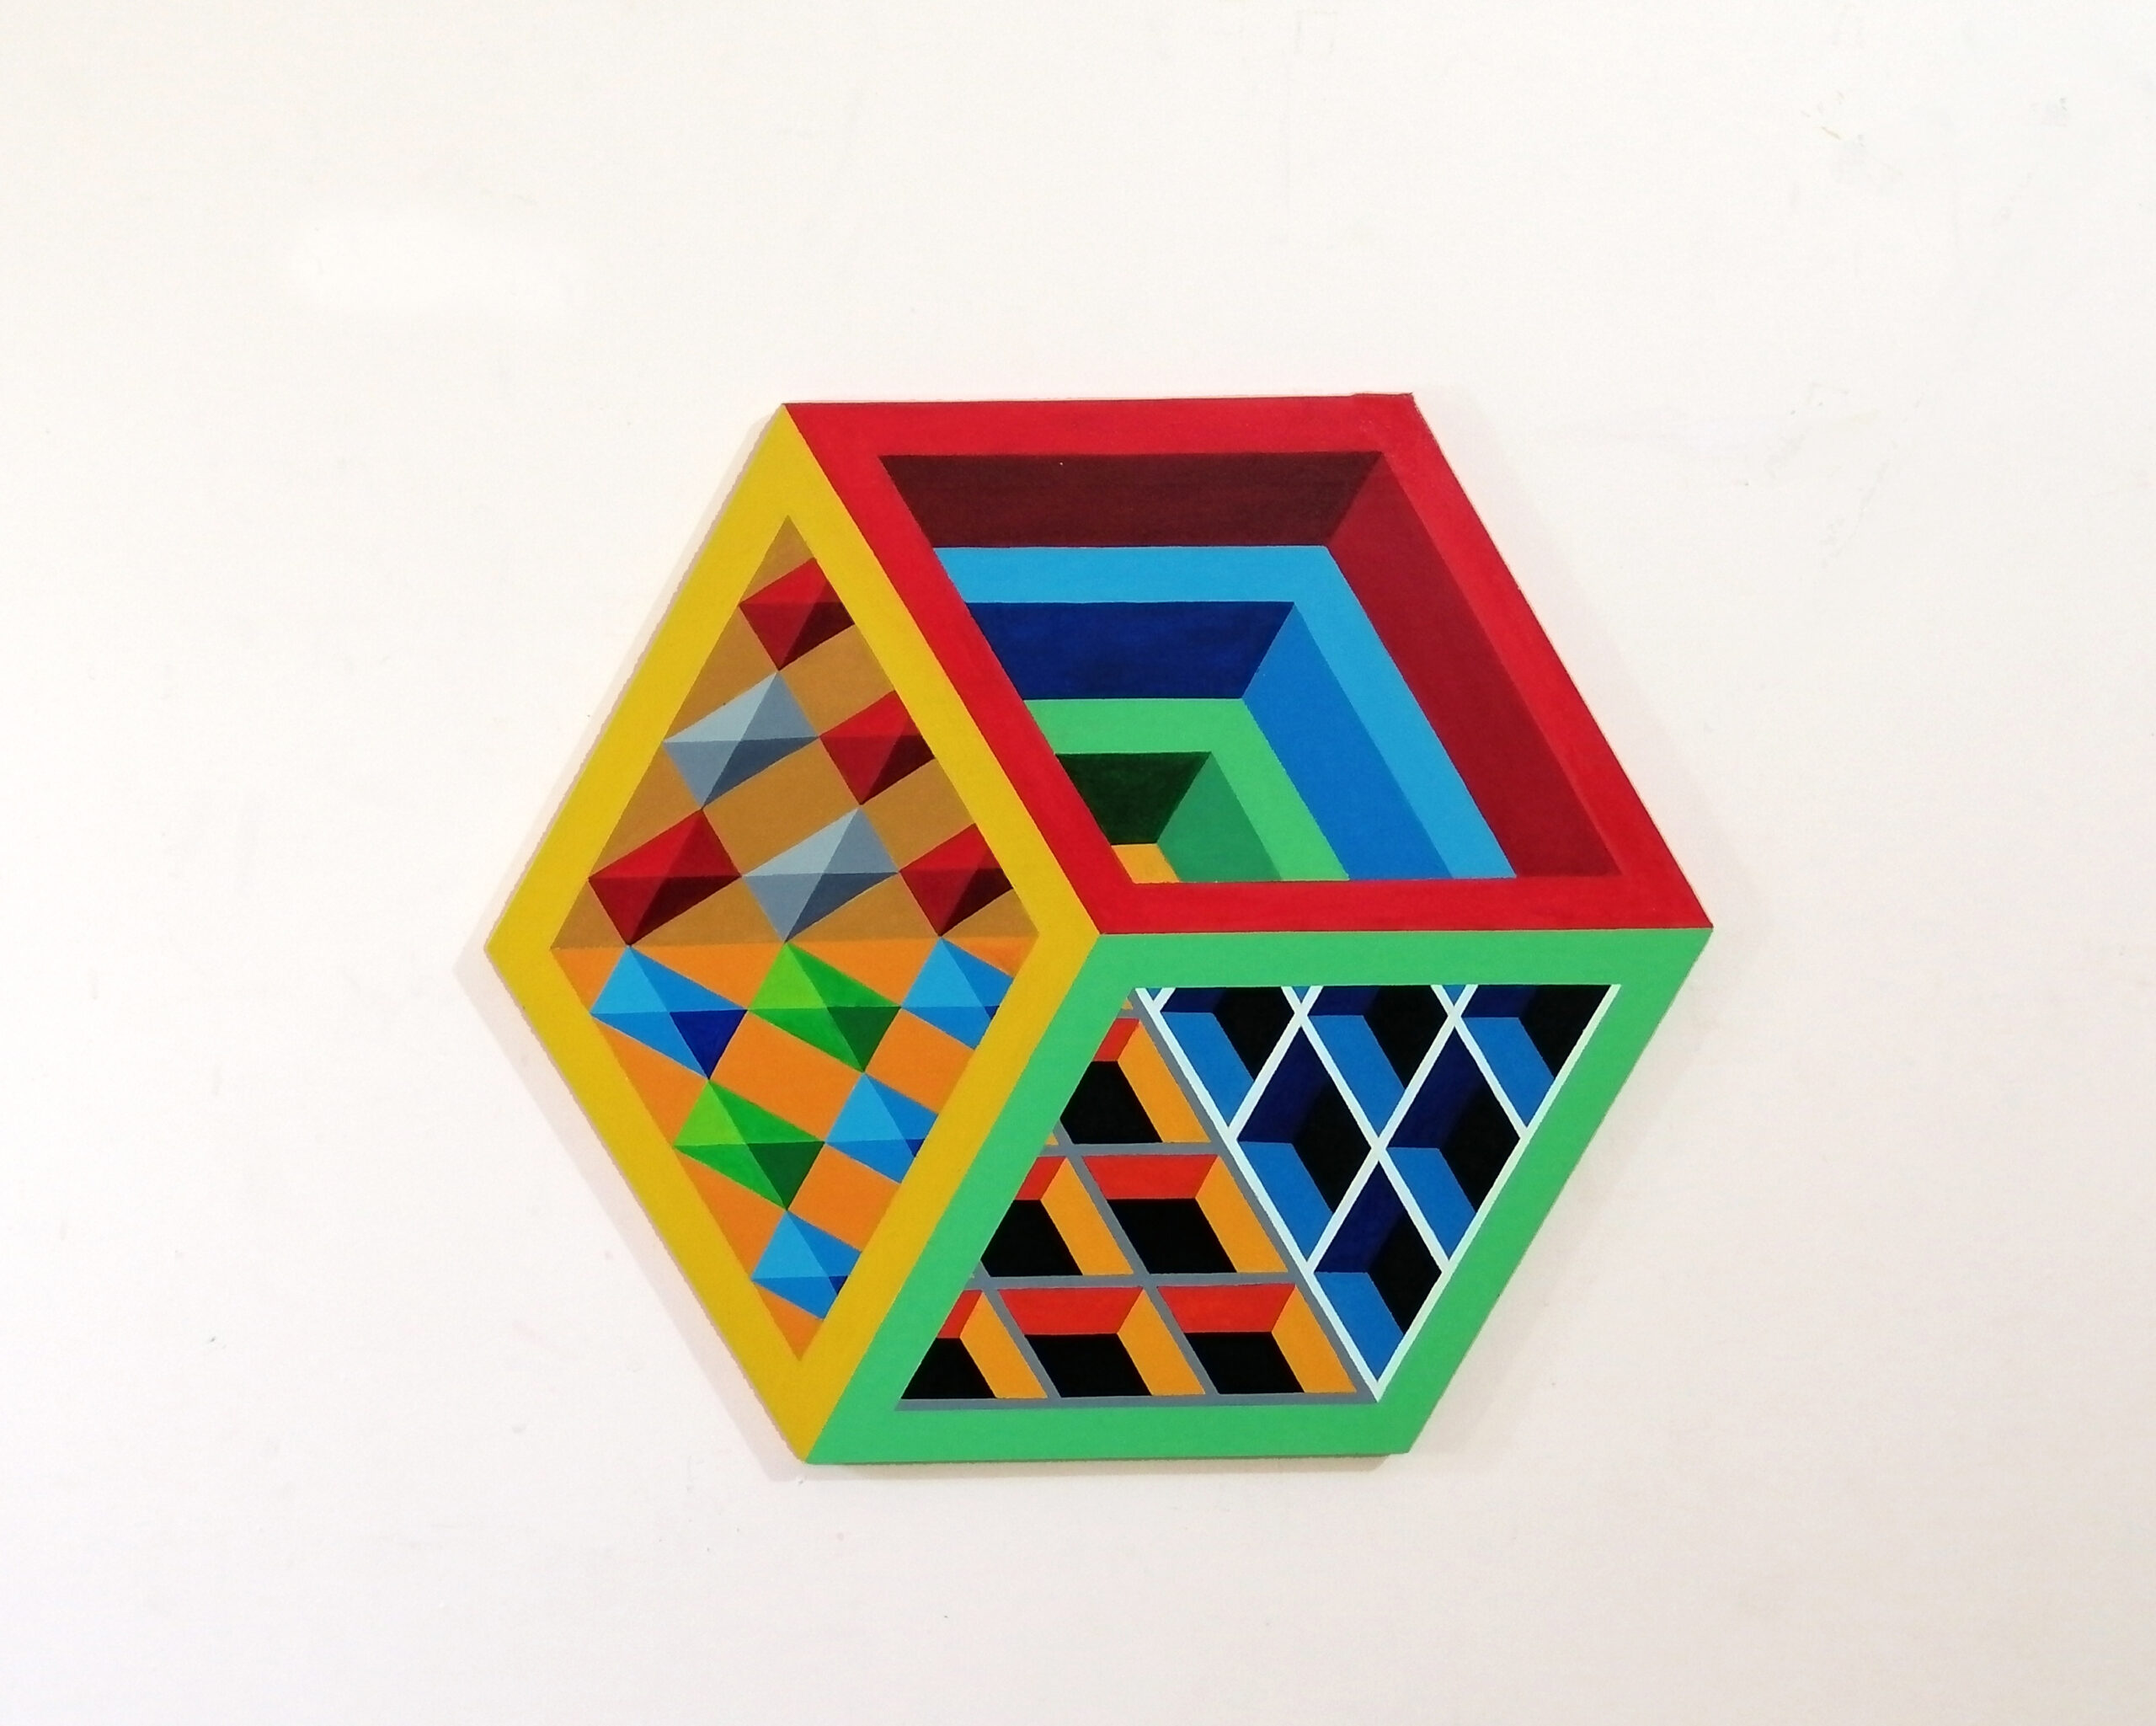 Obaid Ur Rahman<br></br>Inside Out<br></br>Acrylics on Canvas<br></br>12”x12”x12” (hexagon)